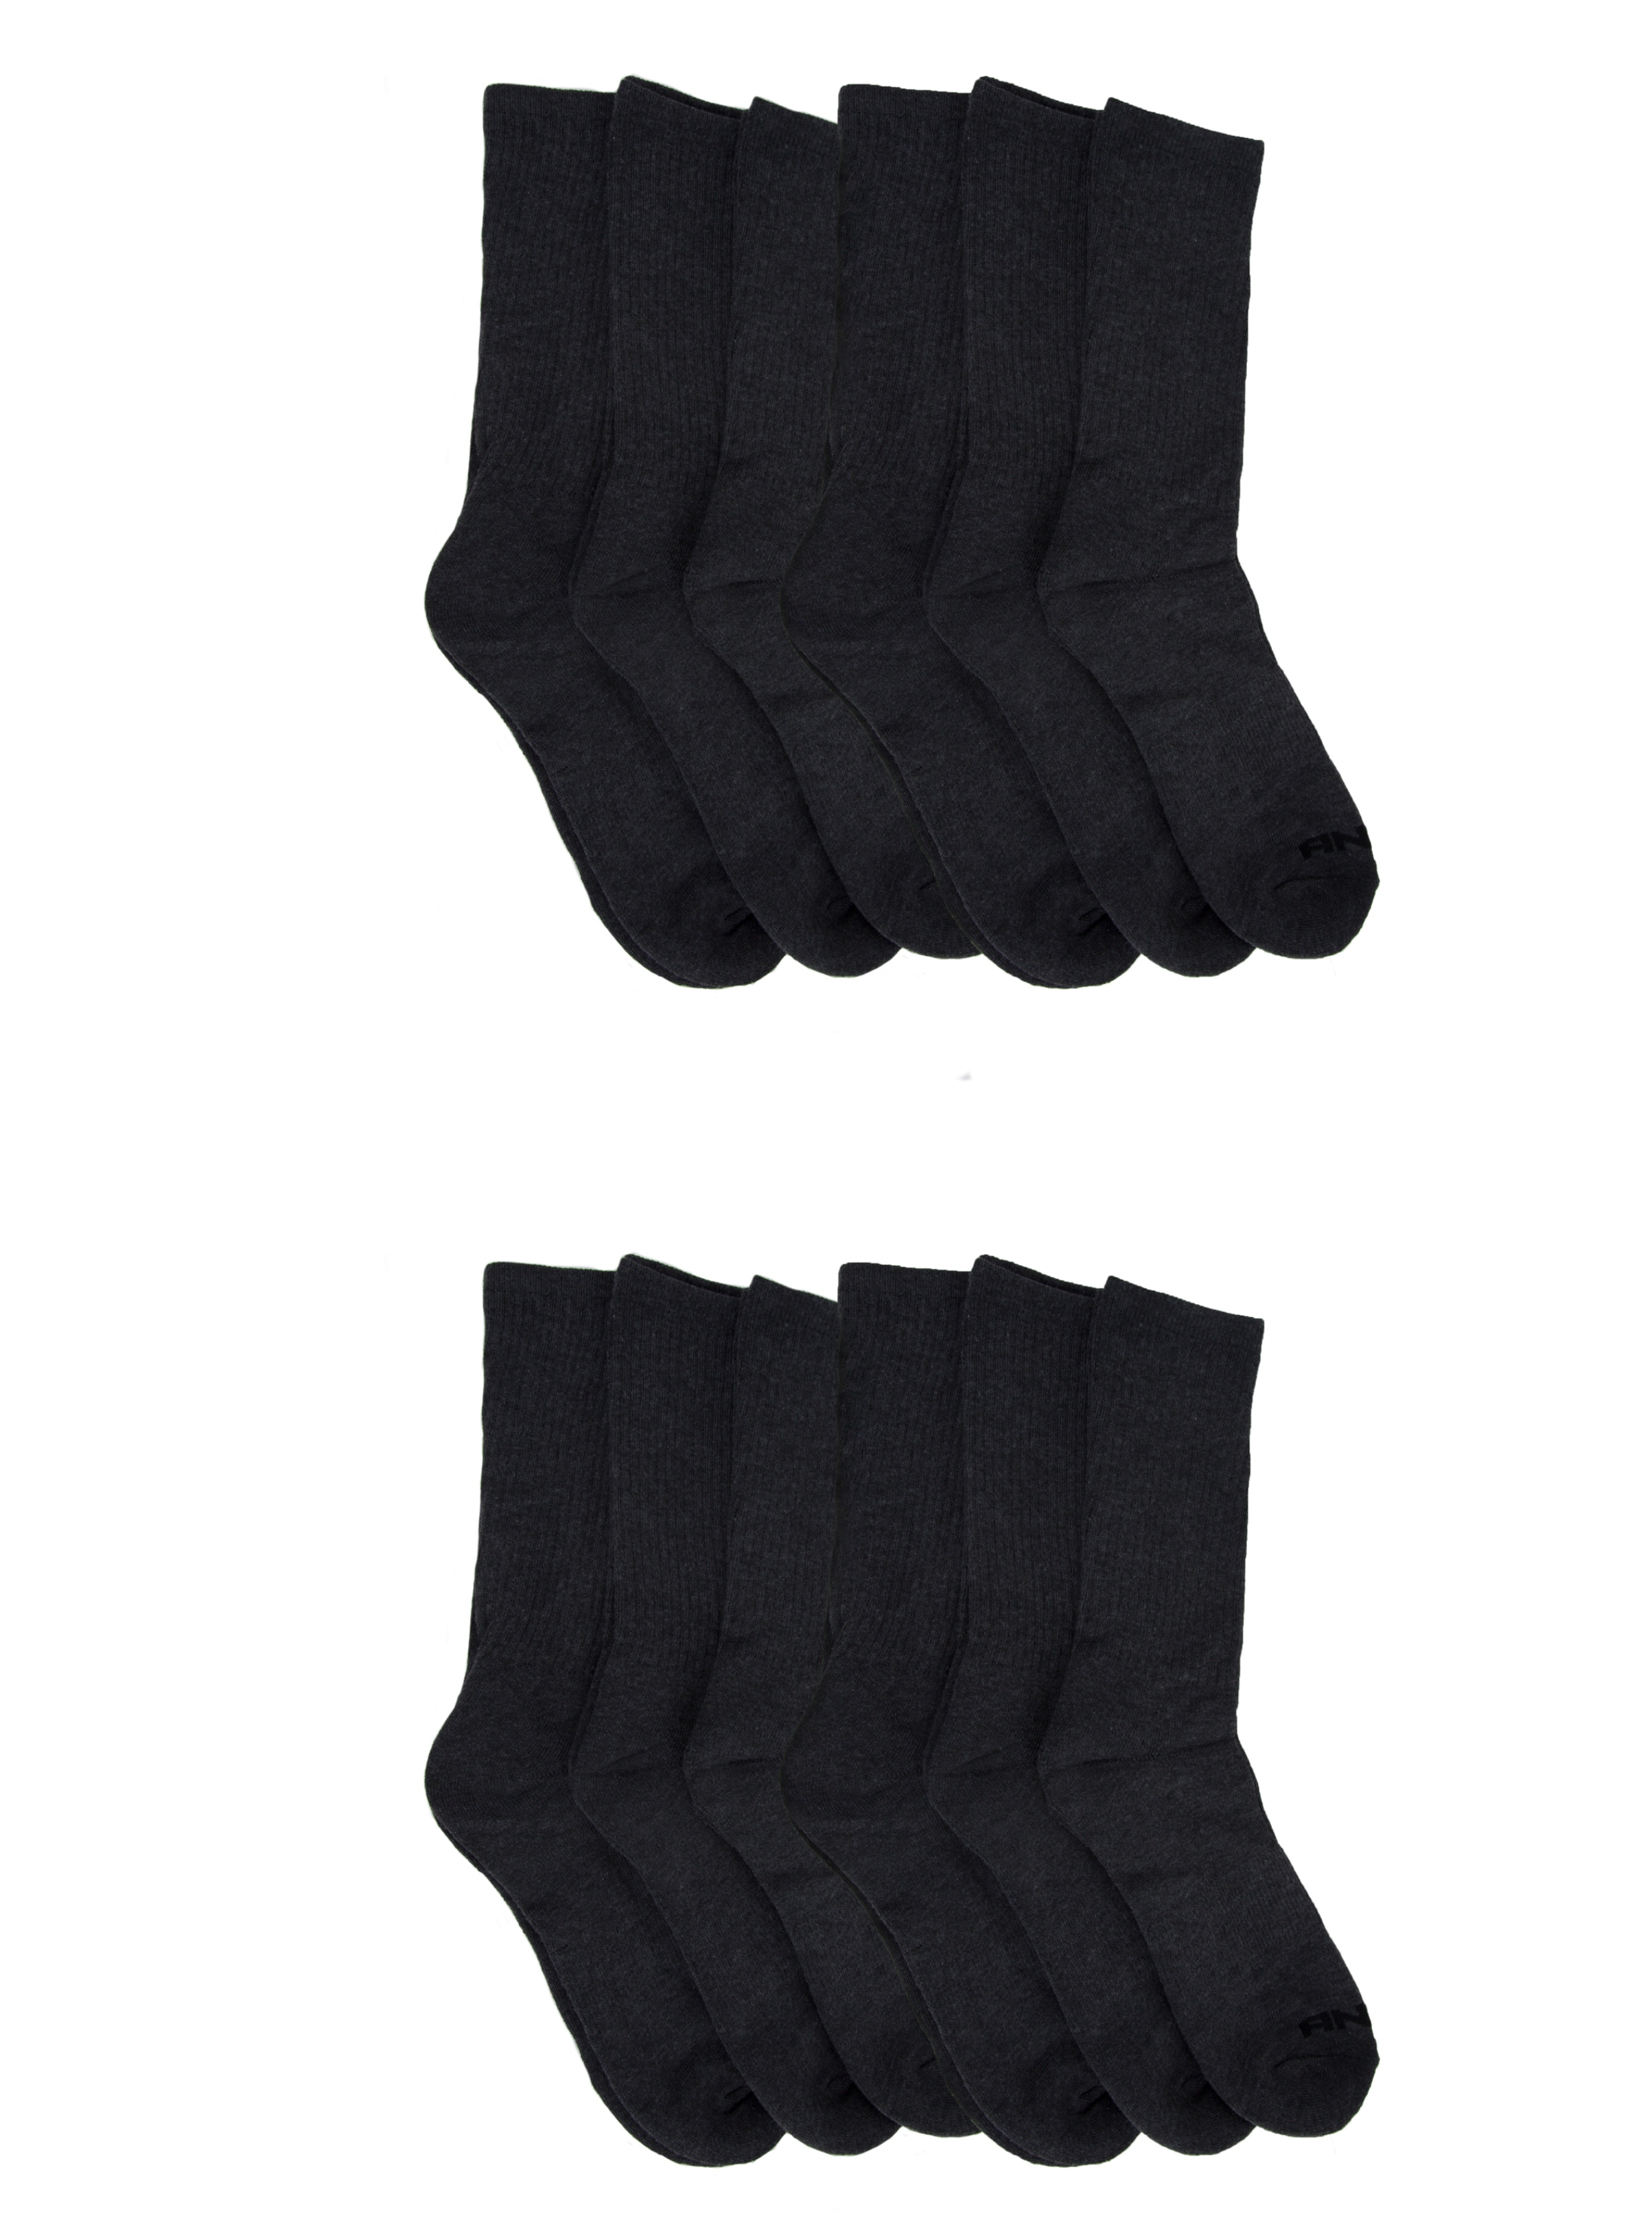 AND1 Men's Gray 12 Pair Crew Socks Sz 10-13 NEW 886028133407 | eBay